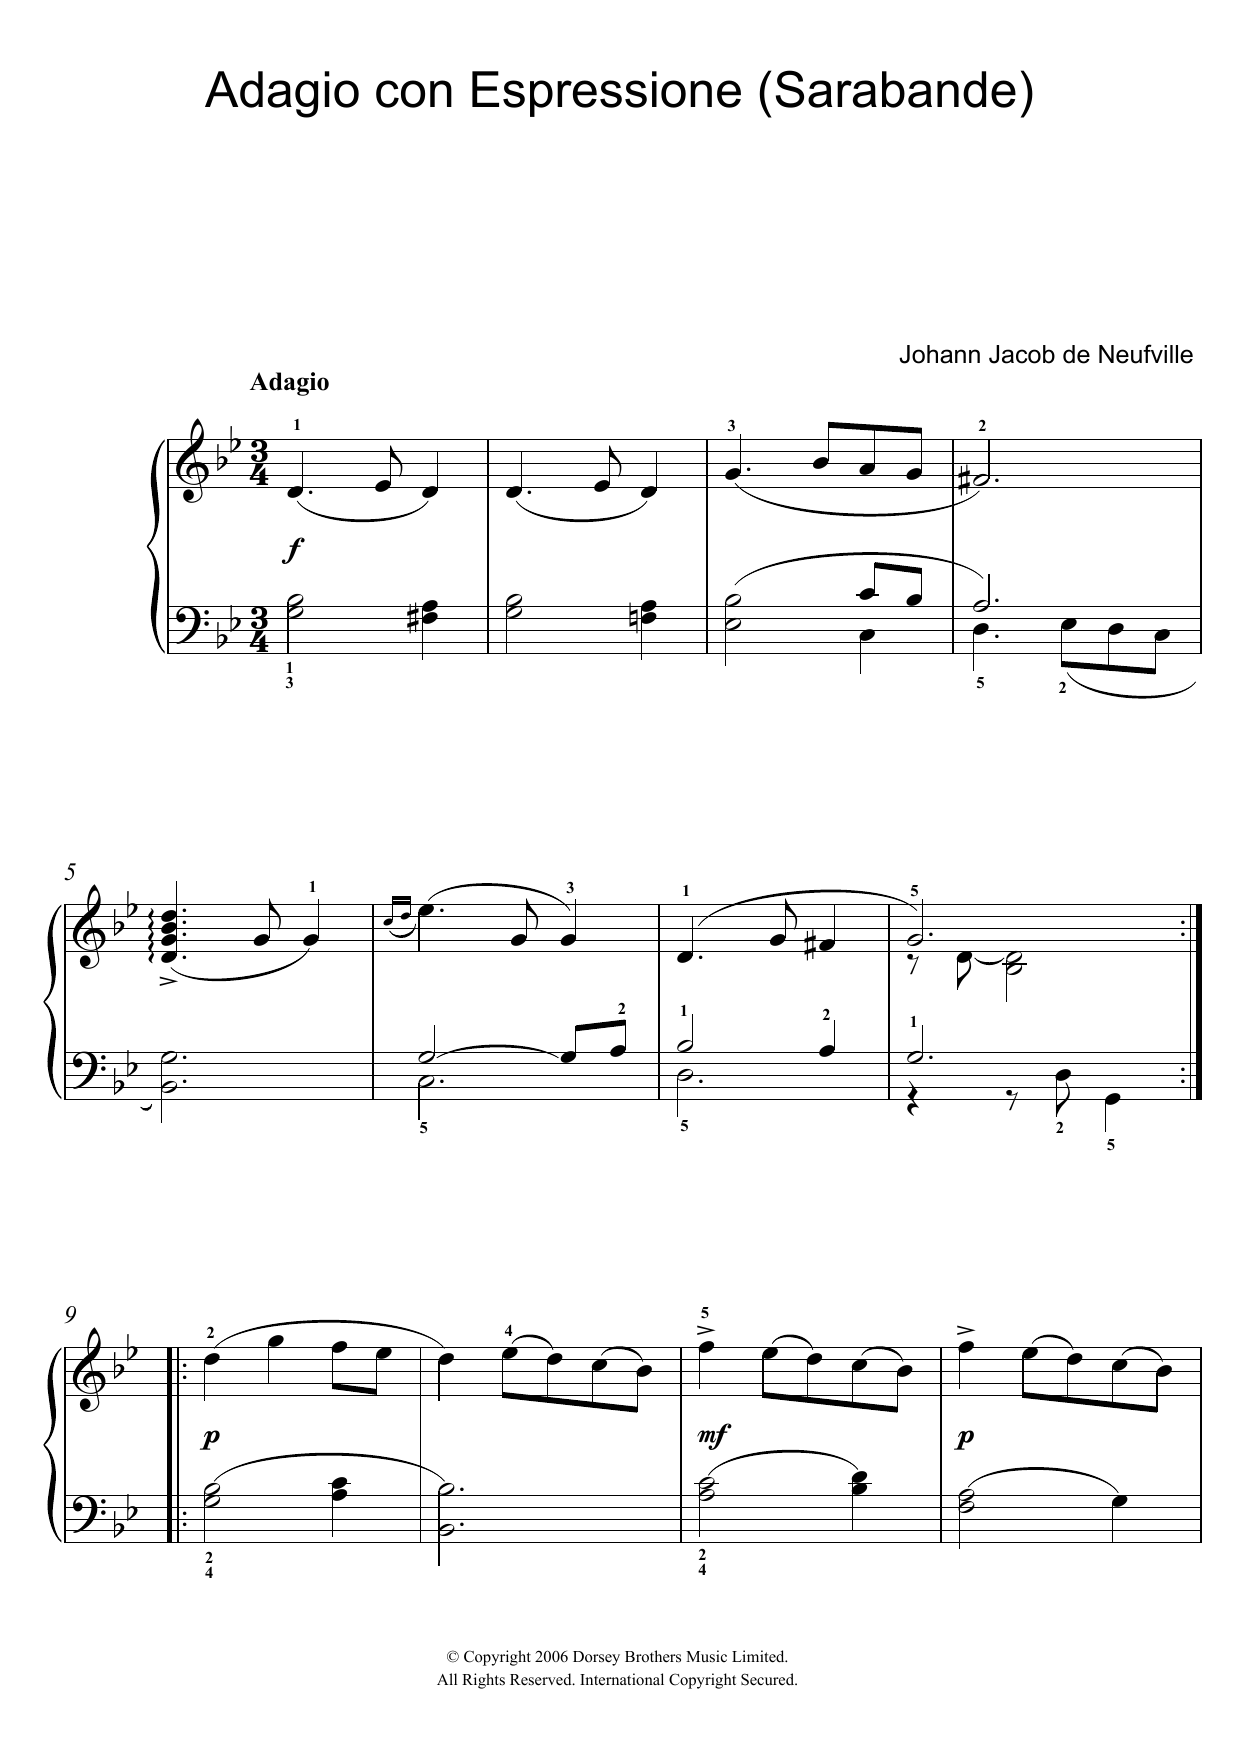 Johann Jacob de Neufville Adagio Con Espressione (Sarabande) Sheet Music Notes & Chords for Piano - Download or Print PDF